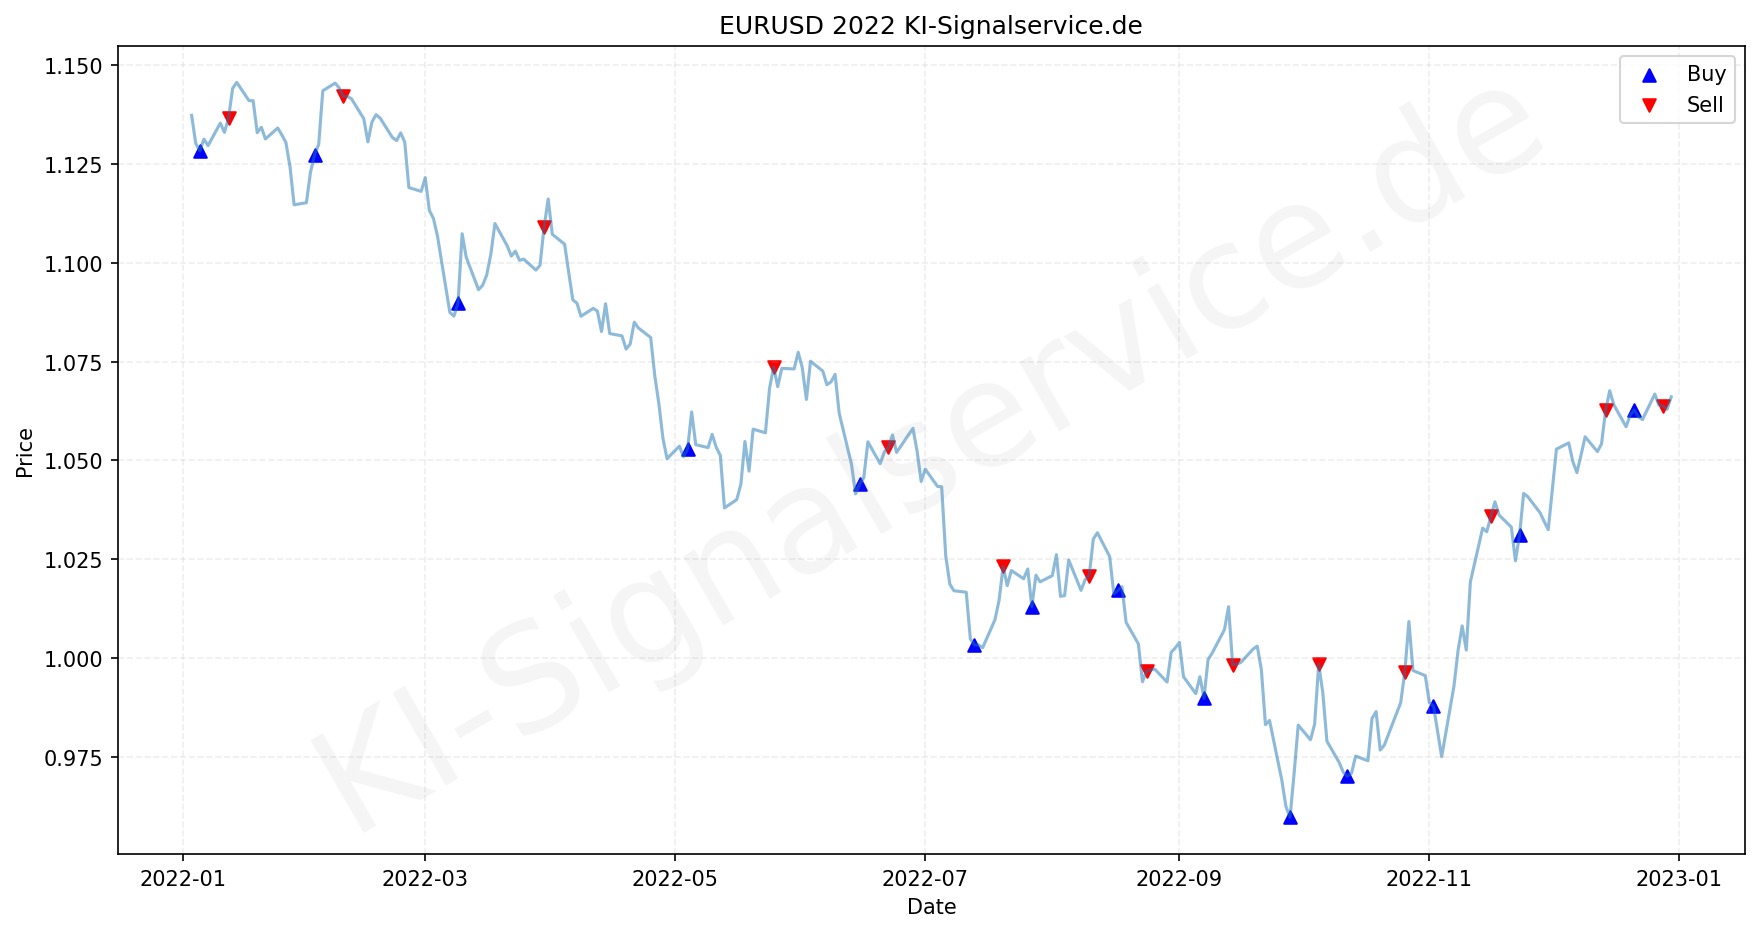 EURUSD Chart - KI Tradingsignale 2022